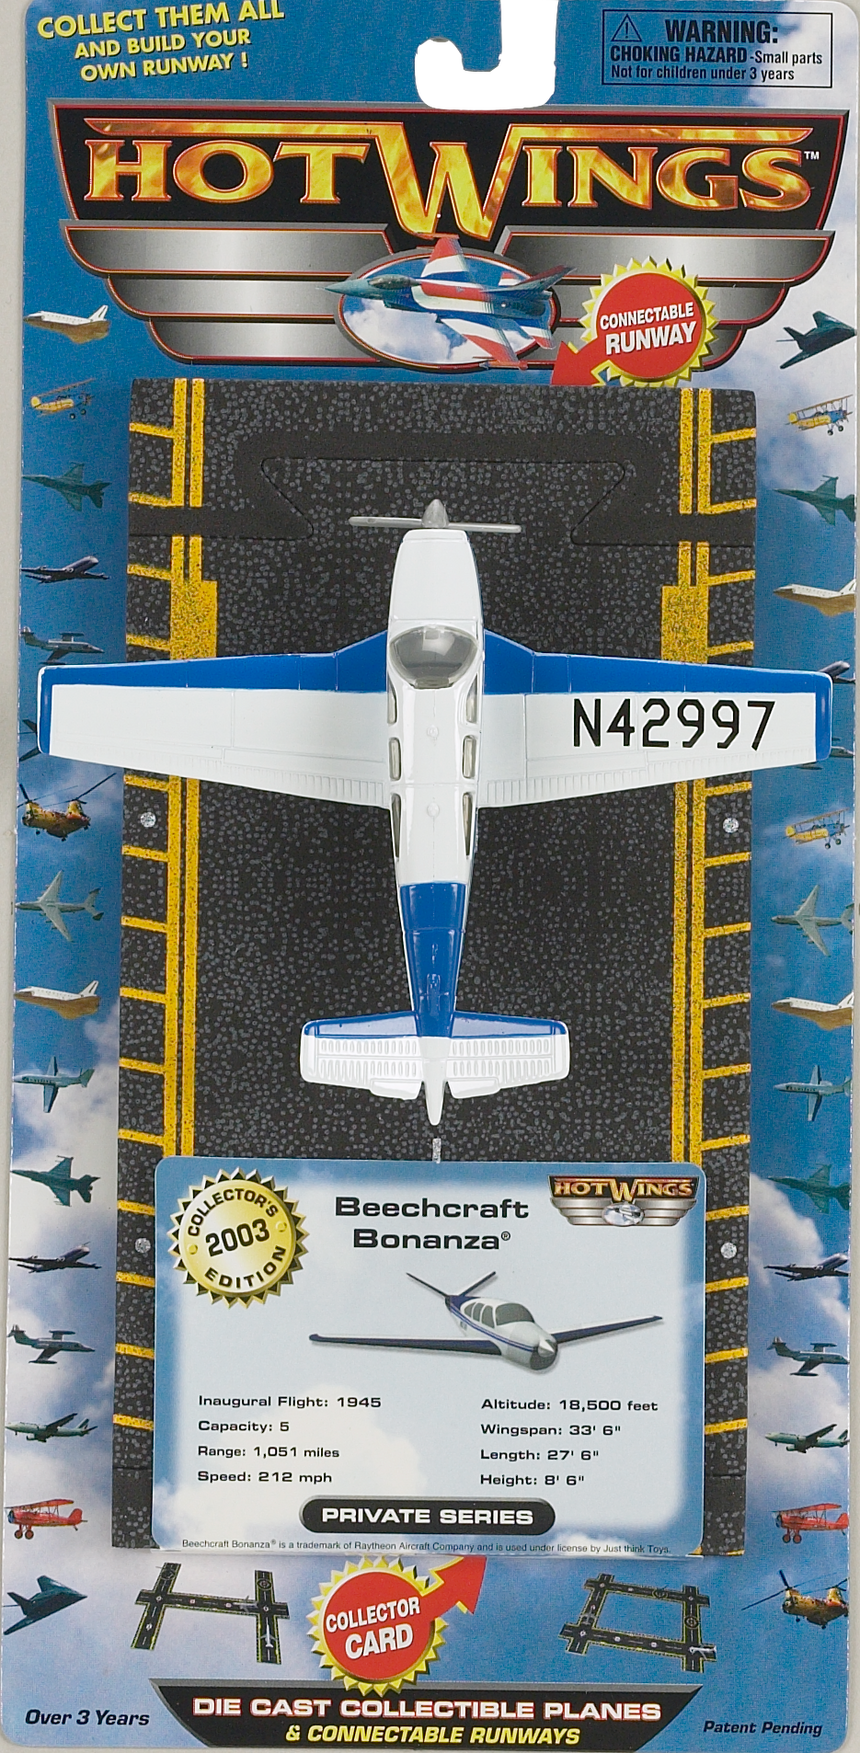 Beechcraft Bonanza (new markings)